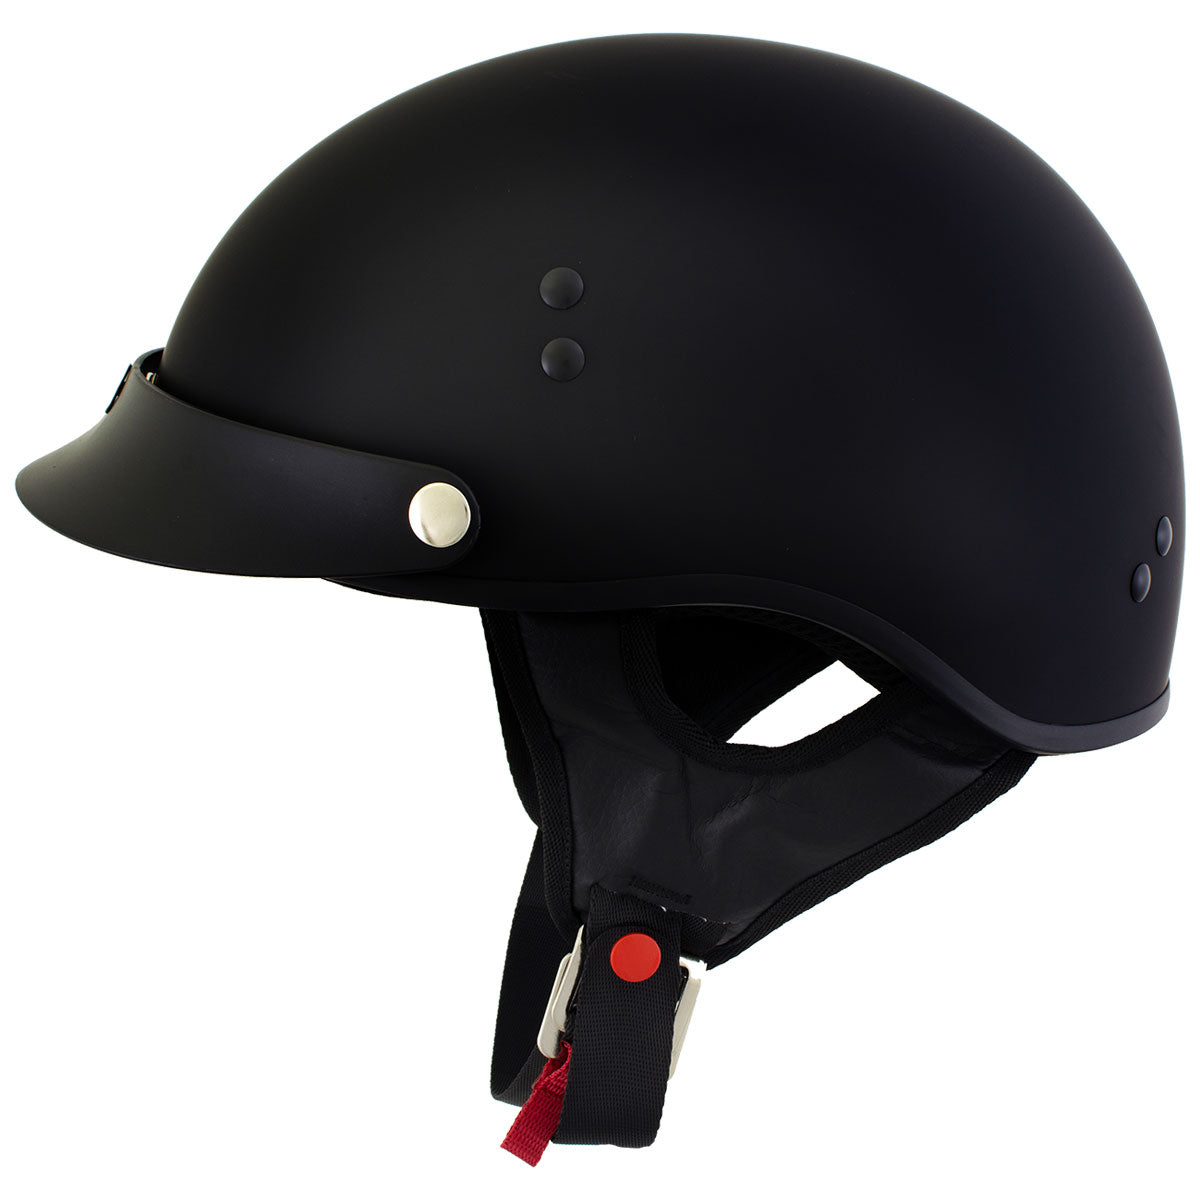 Outlaw T70 'Stealth'Advanced DOT Solid Flat Black Half Motorcycle Skull Helmet